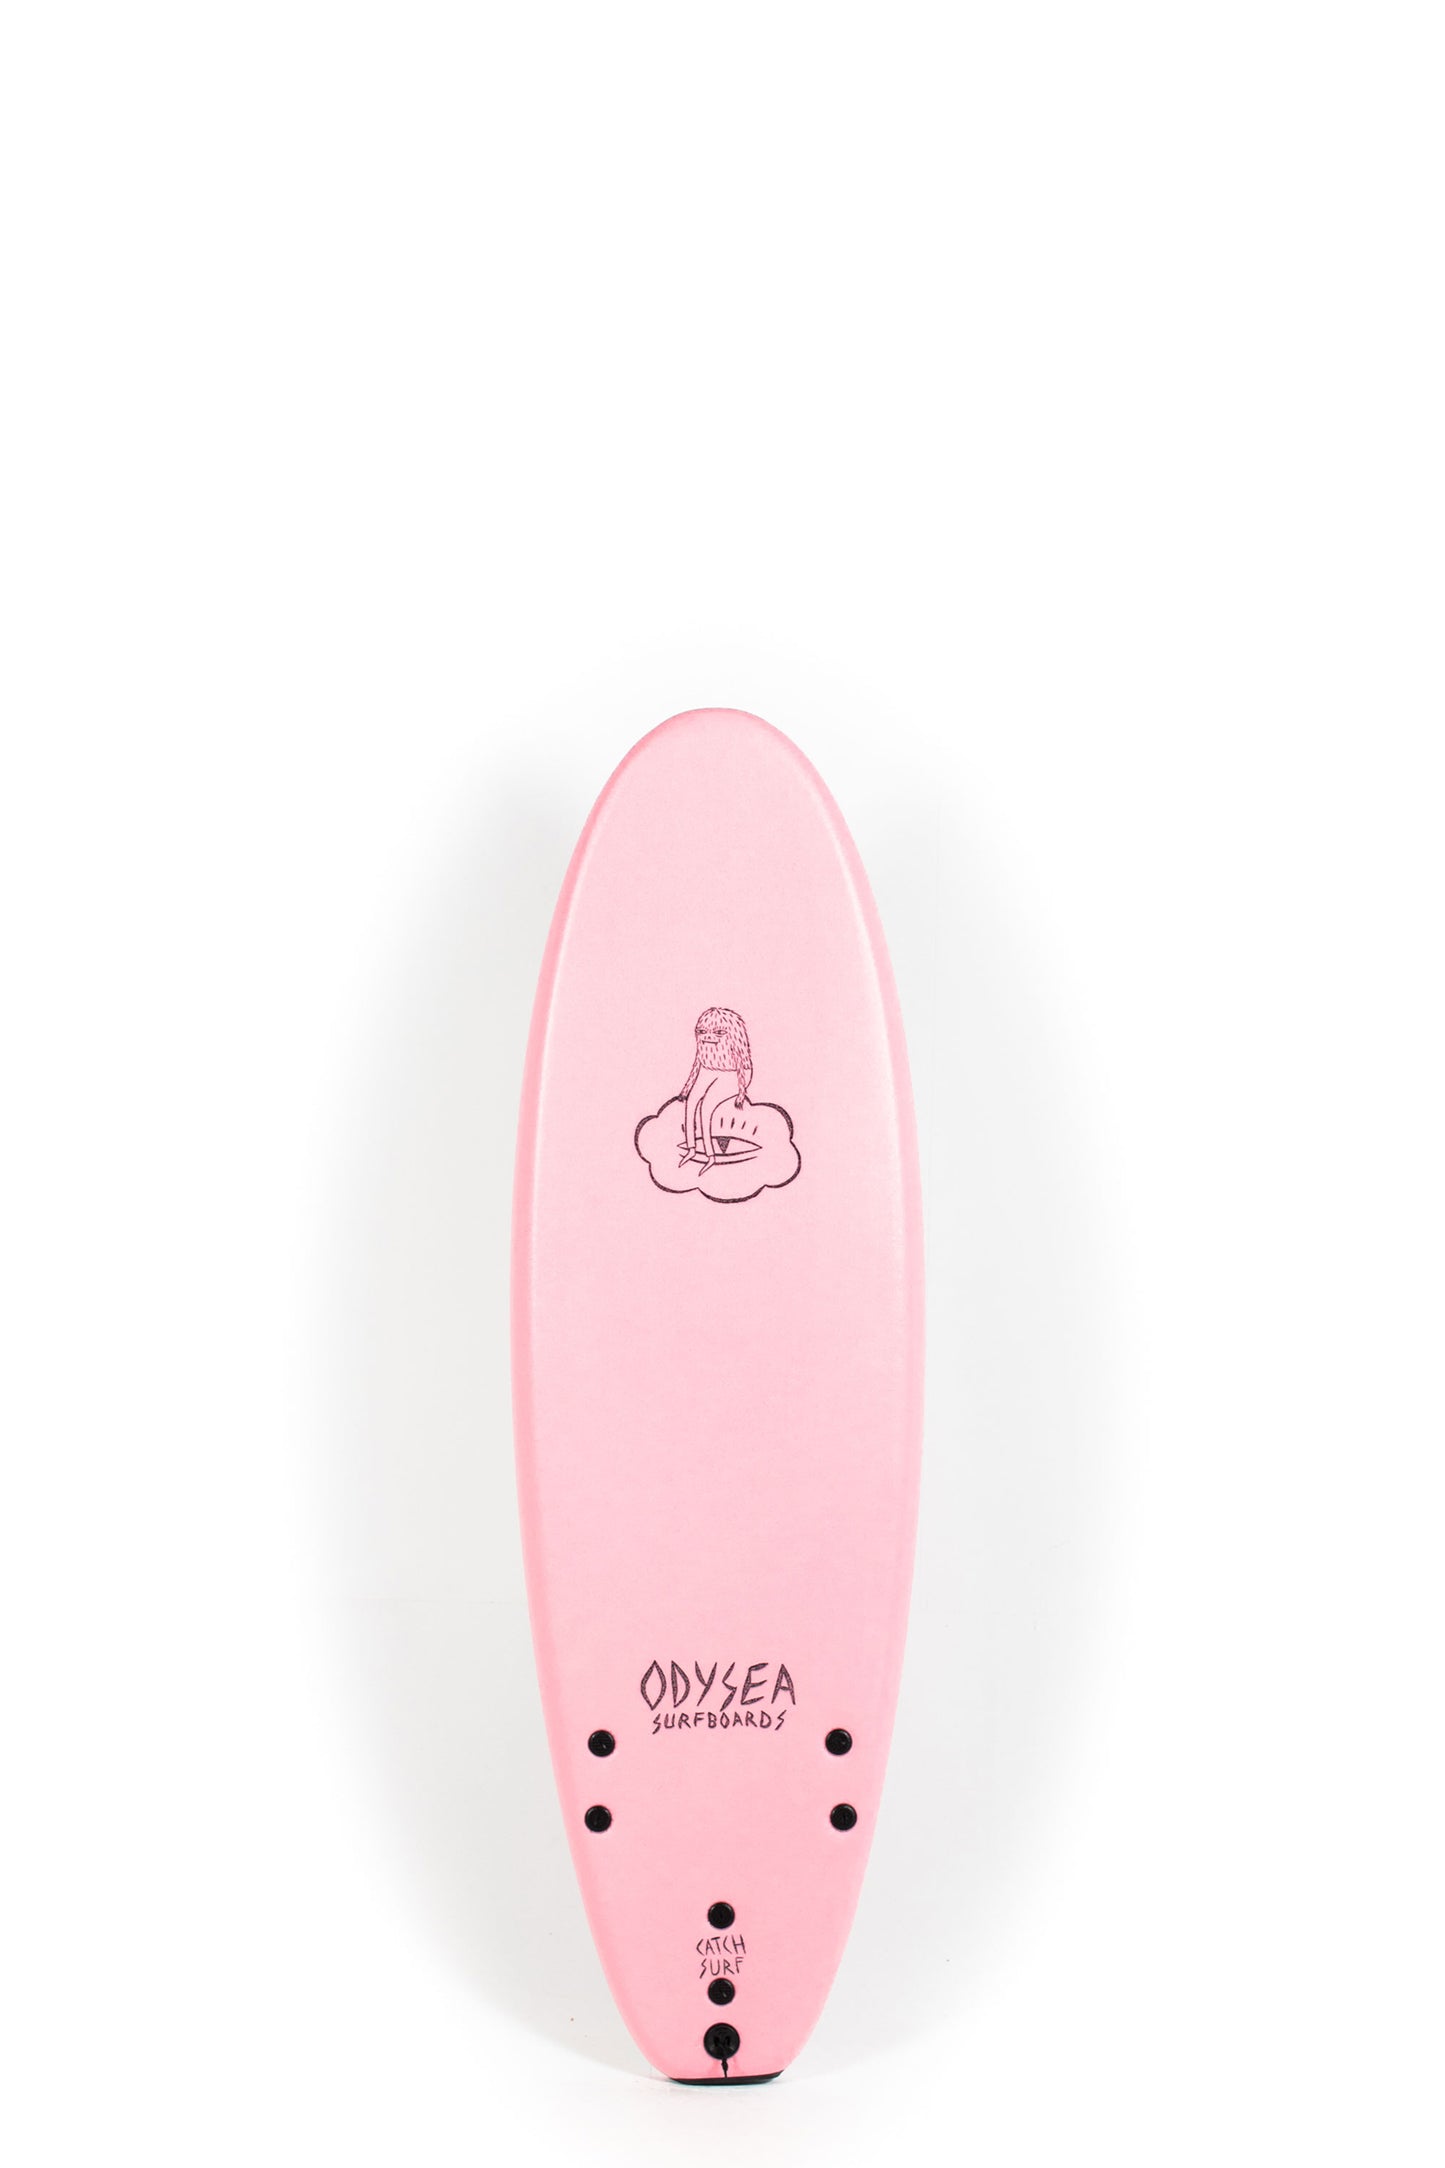 Pukas-Surf-Shop-Catch-Surf-Surfboards-Odysea-Log-Evan-Rossell-Pink